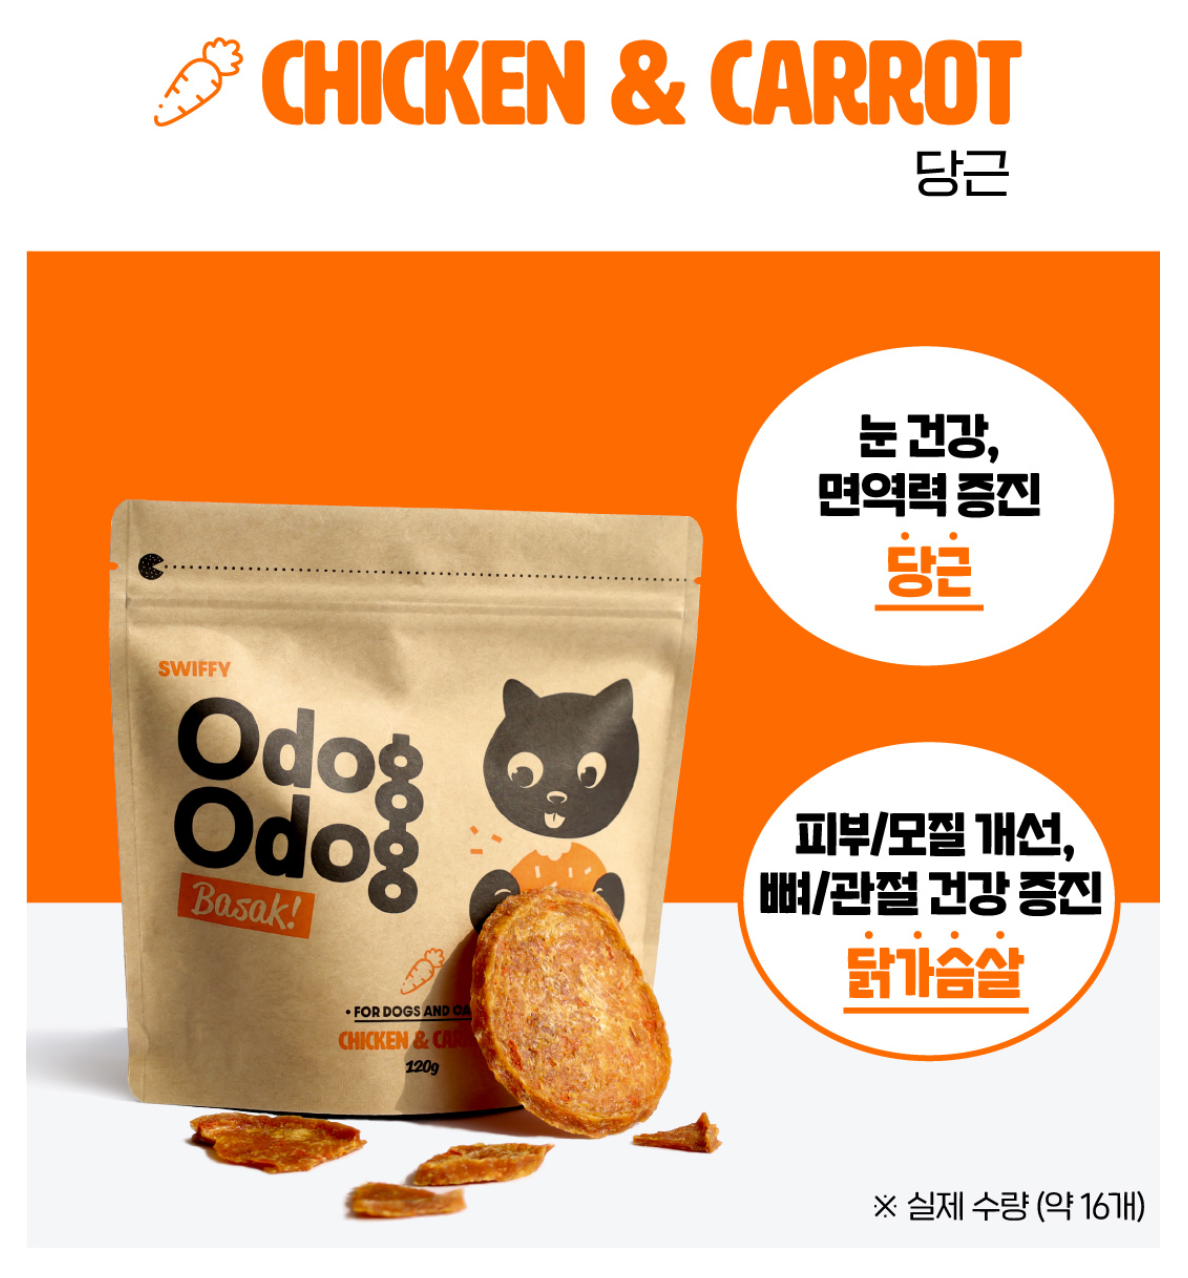 SWIFFY Odog Odog Crispy - Chicken & Carrot